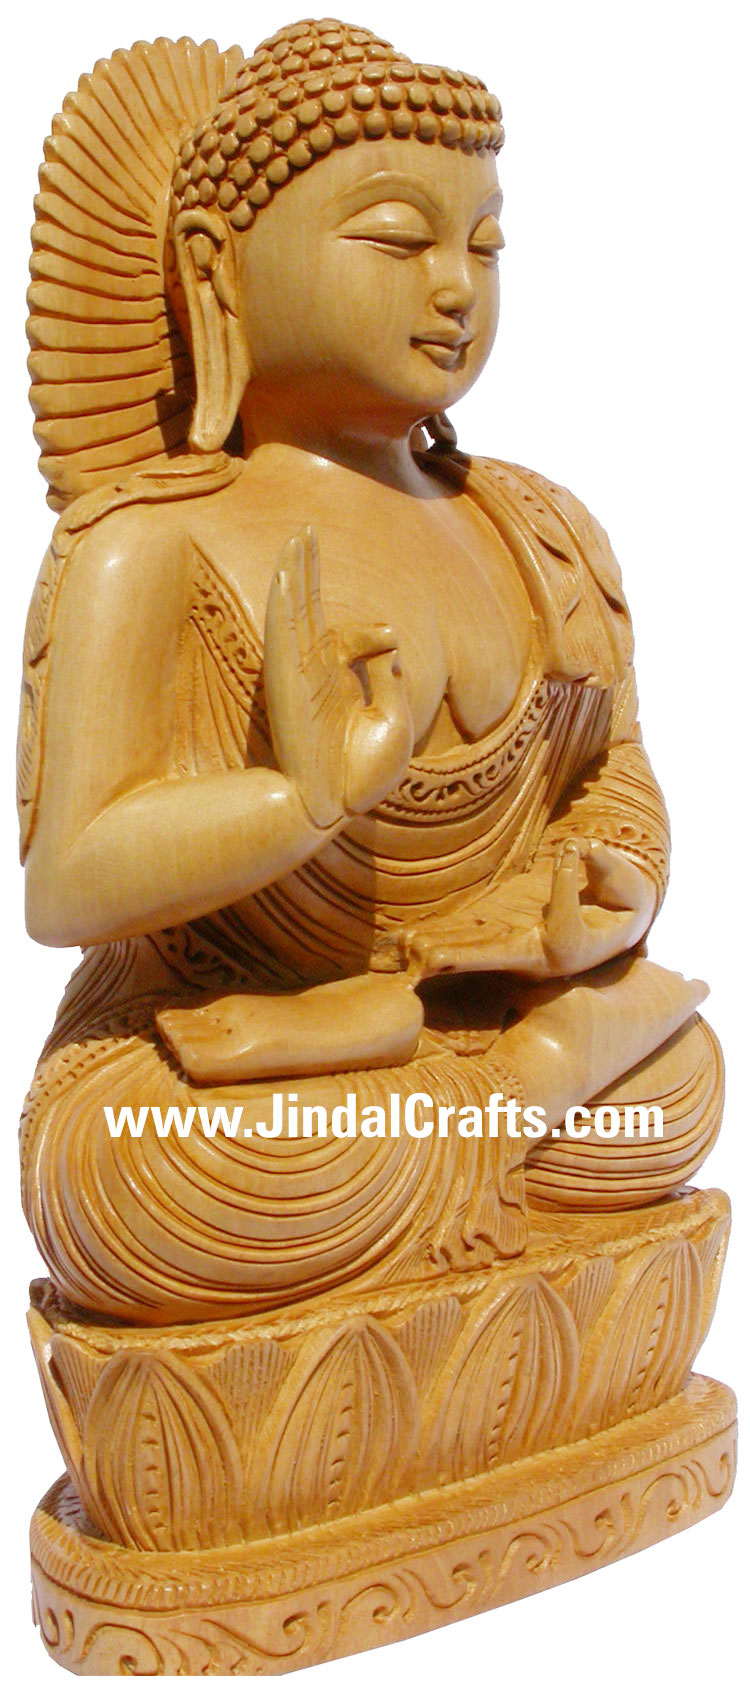 Masterpiece - Wood Handcarved Sculpture Buddha Statuette Indian Buddhism Crafts